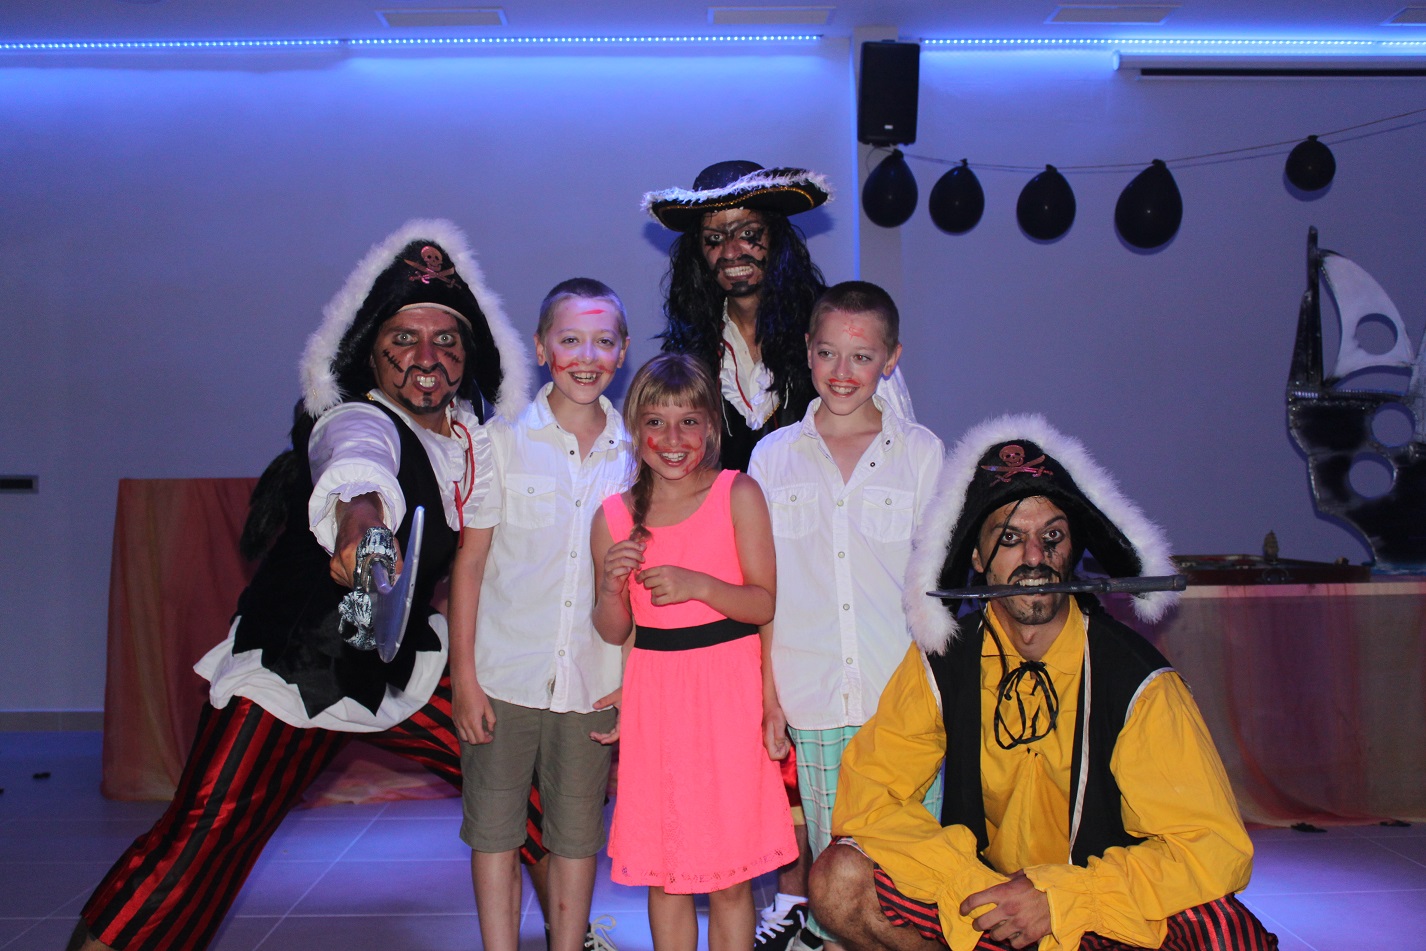 Umag Pirat party